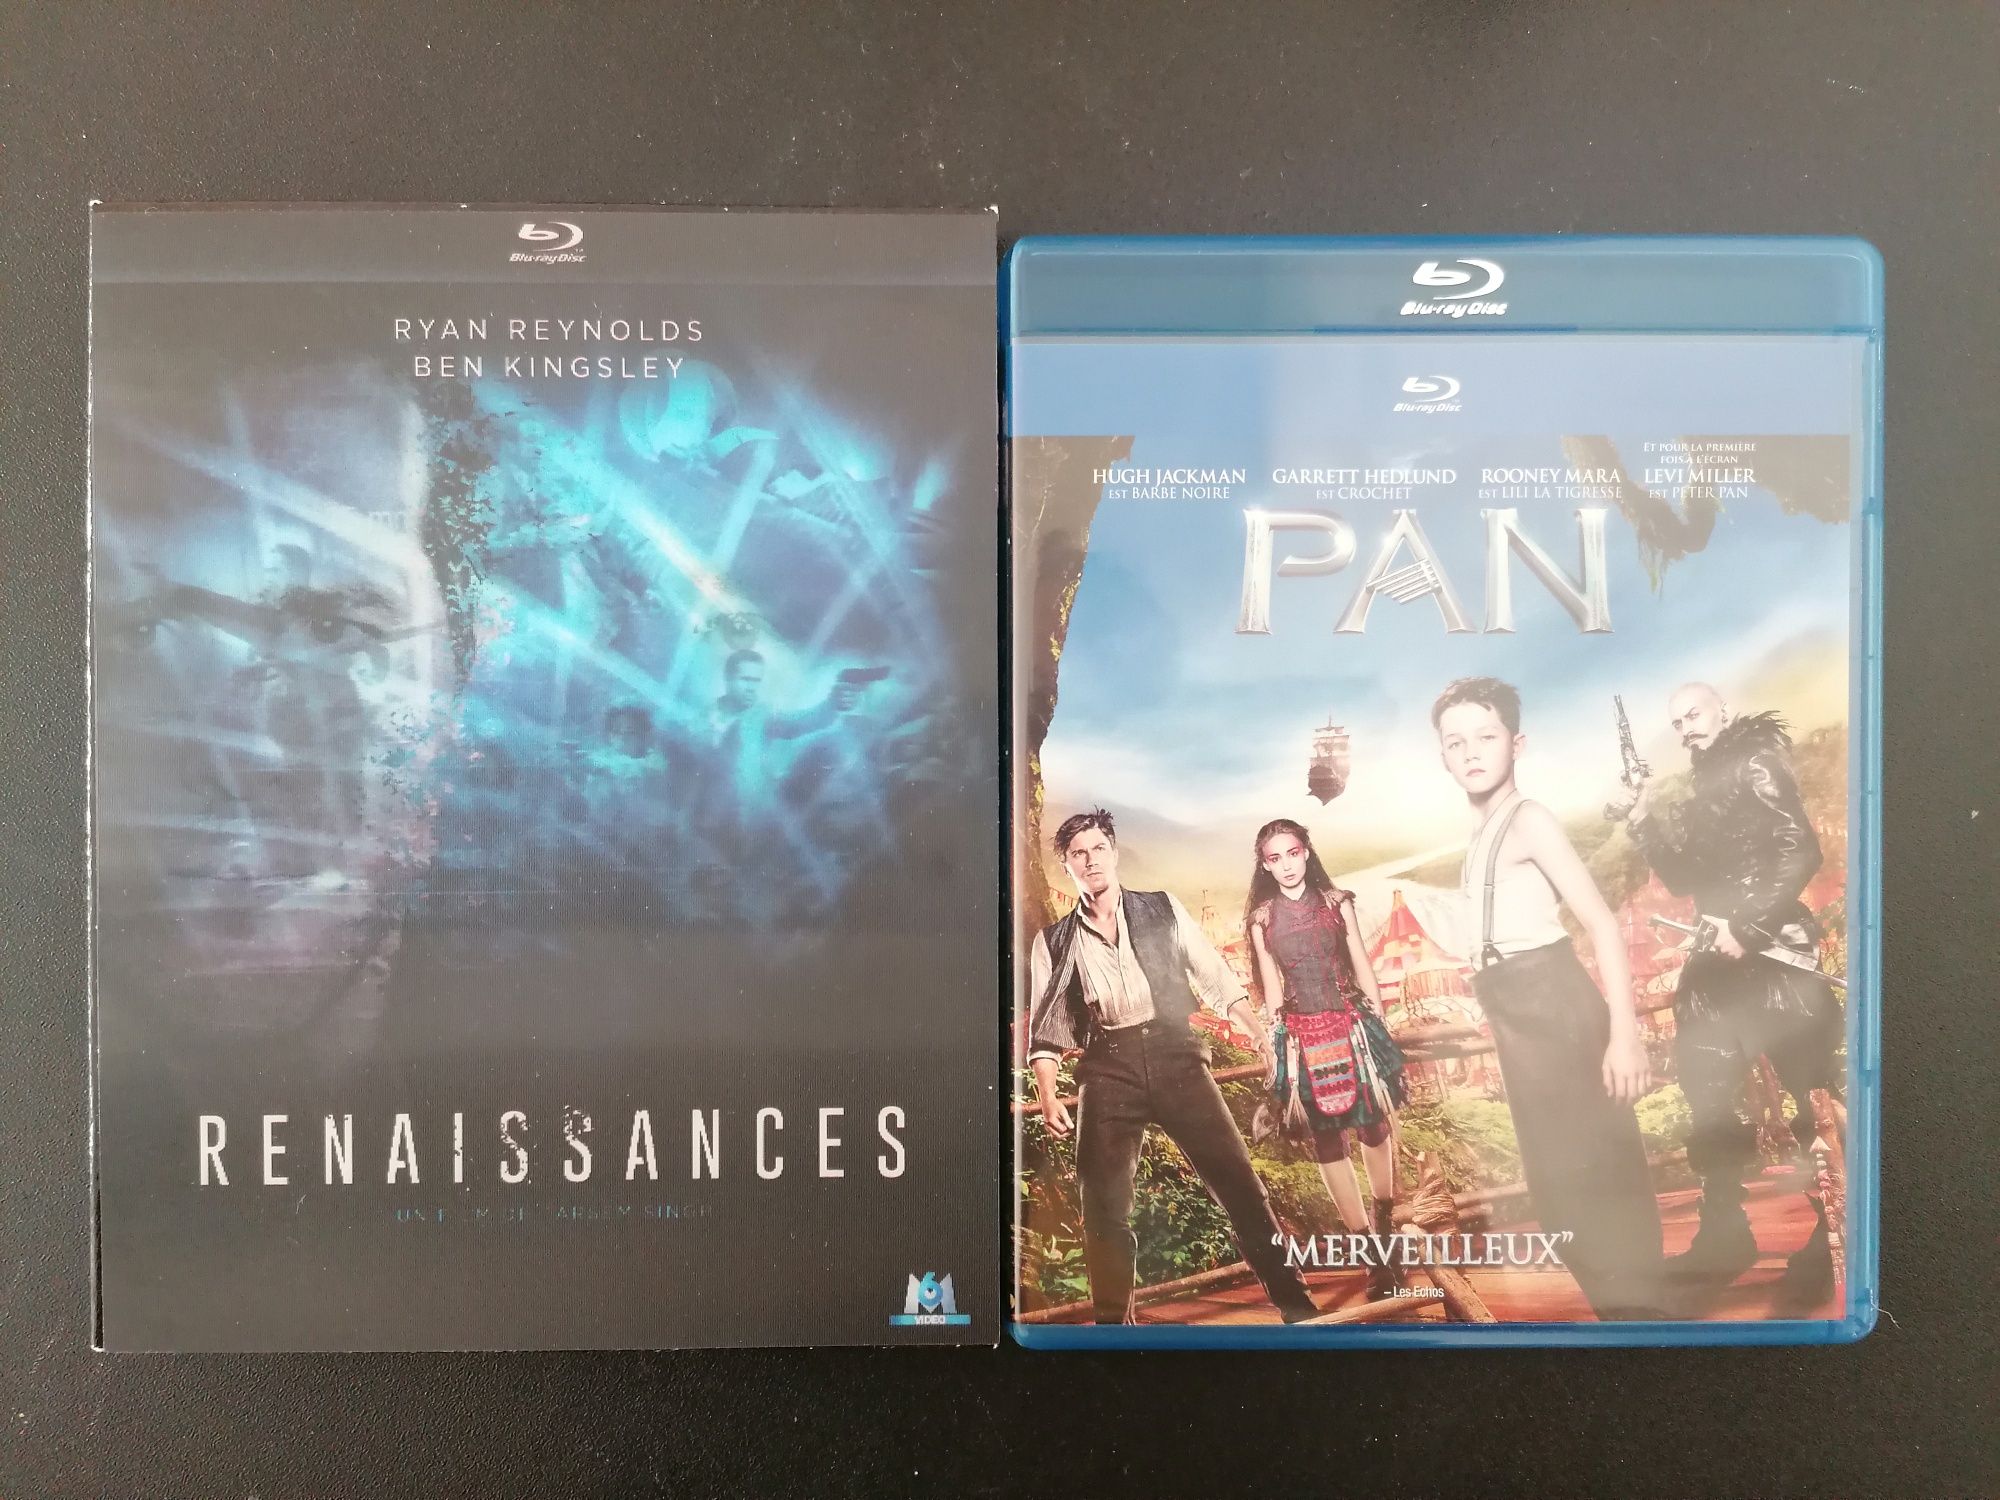 Blu ray - lote Pan e Self/less
https://m.imdb.com › title
Self/less (2